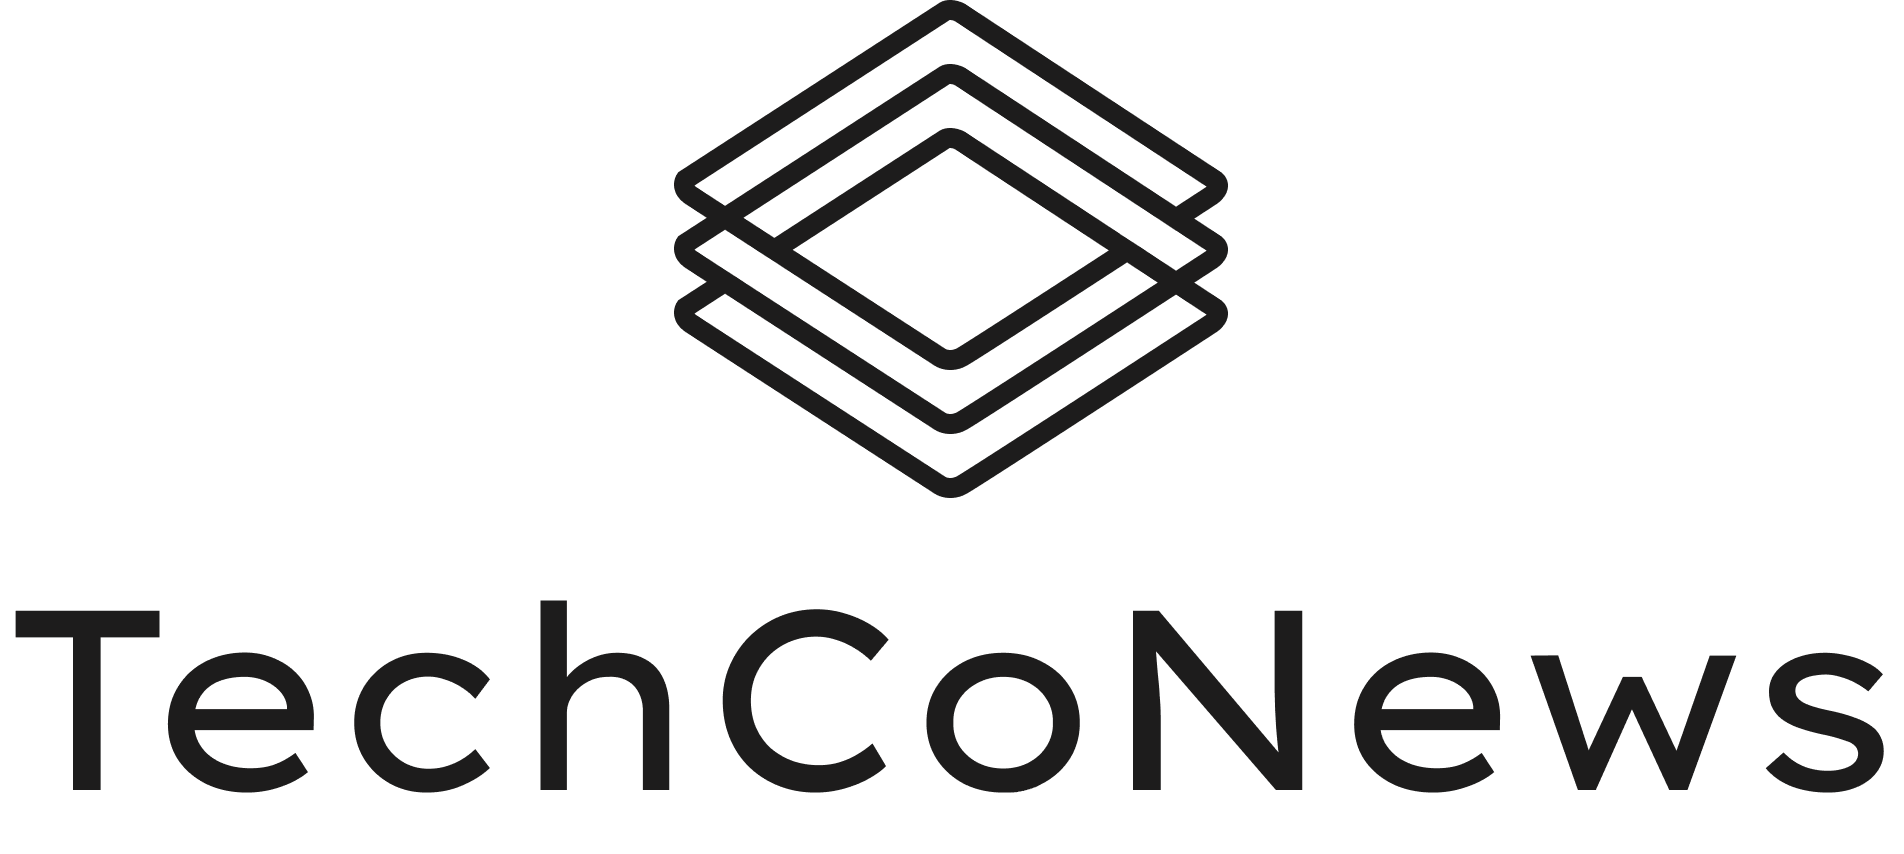 techconews-logo